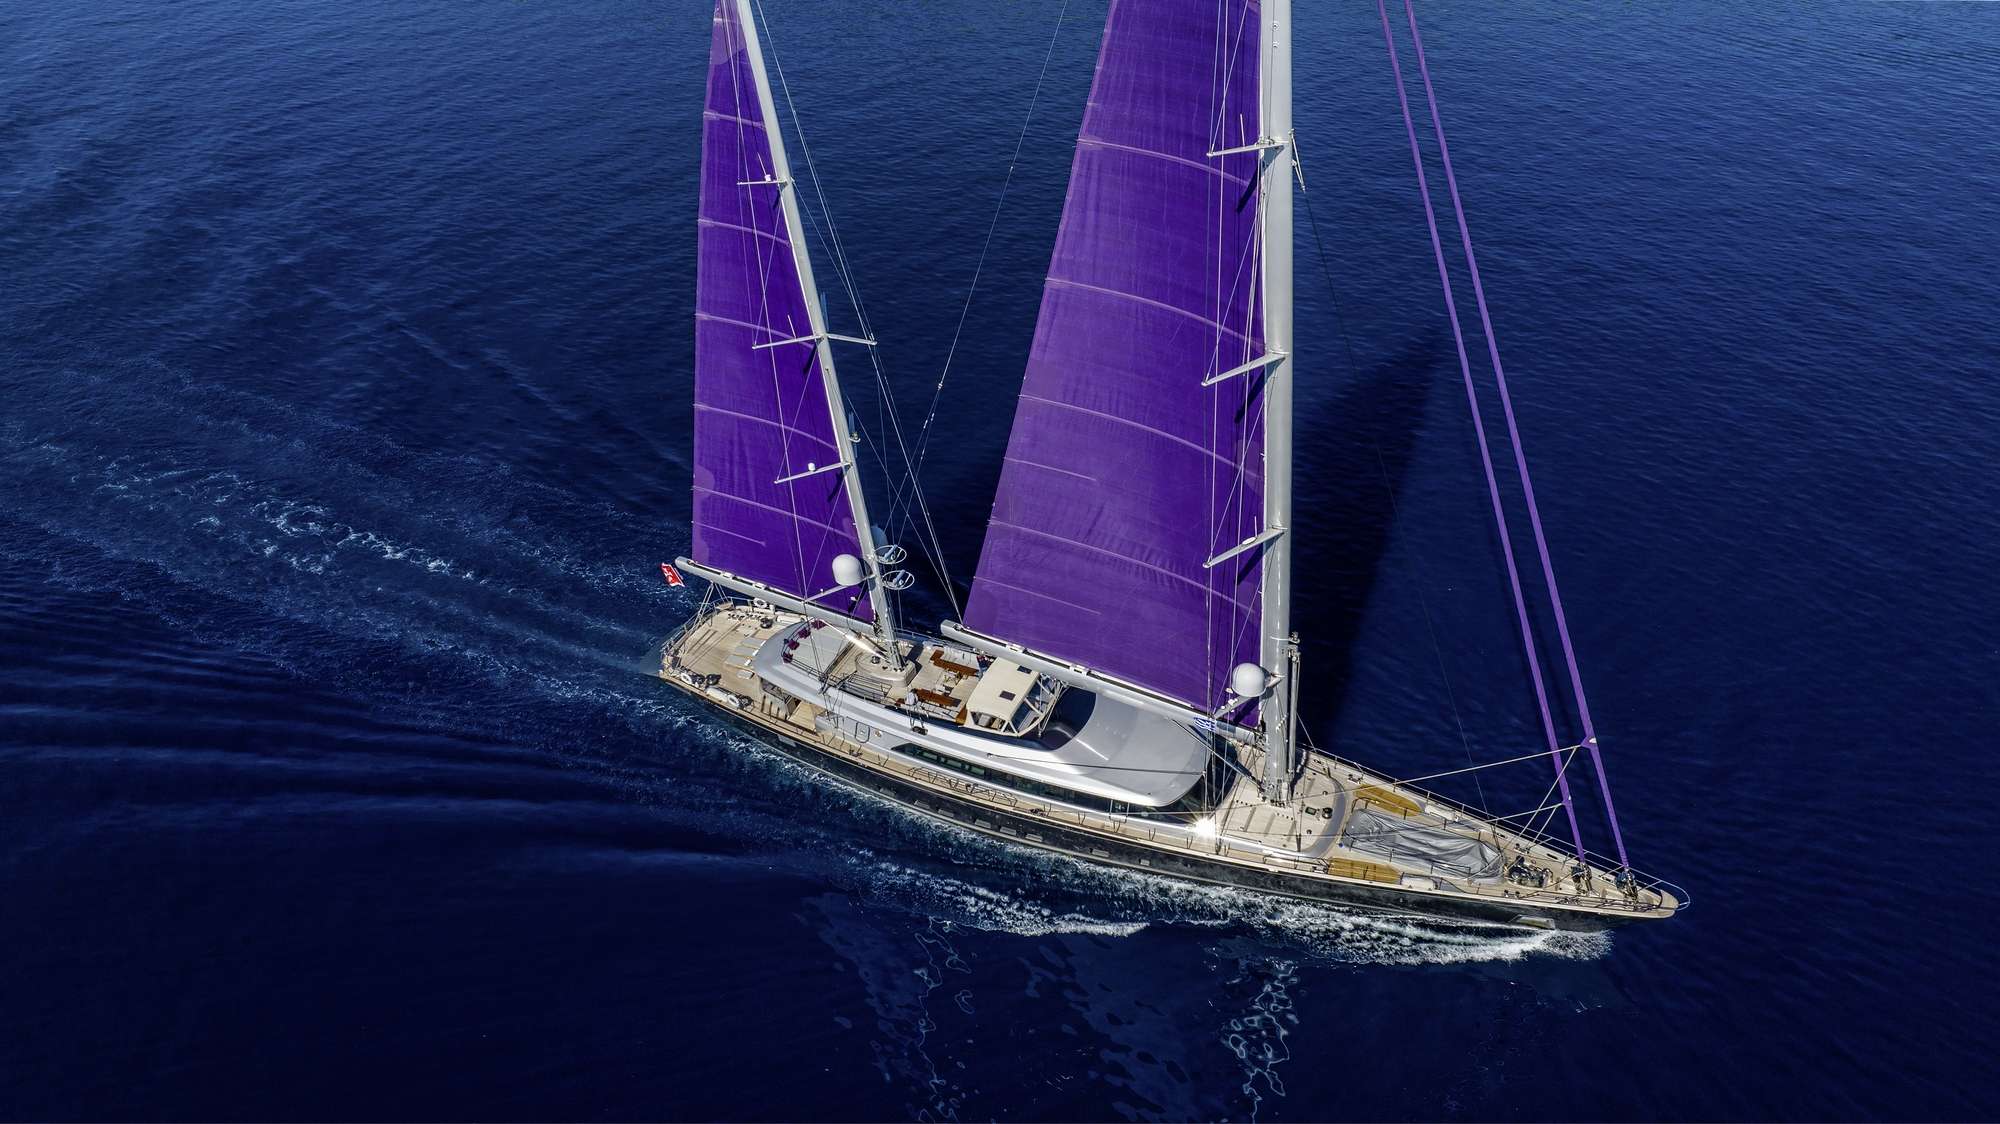 baracuda valletta - Yacht Charter Portorož & Boat hire in East Mediterranean 2